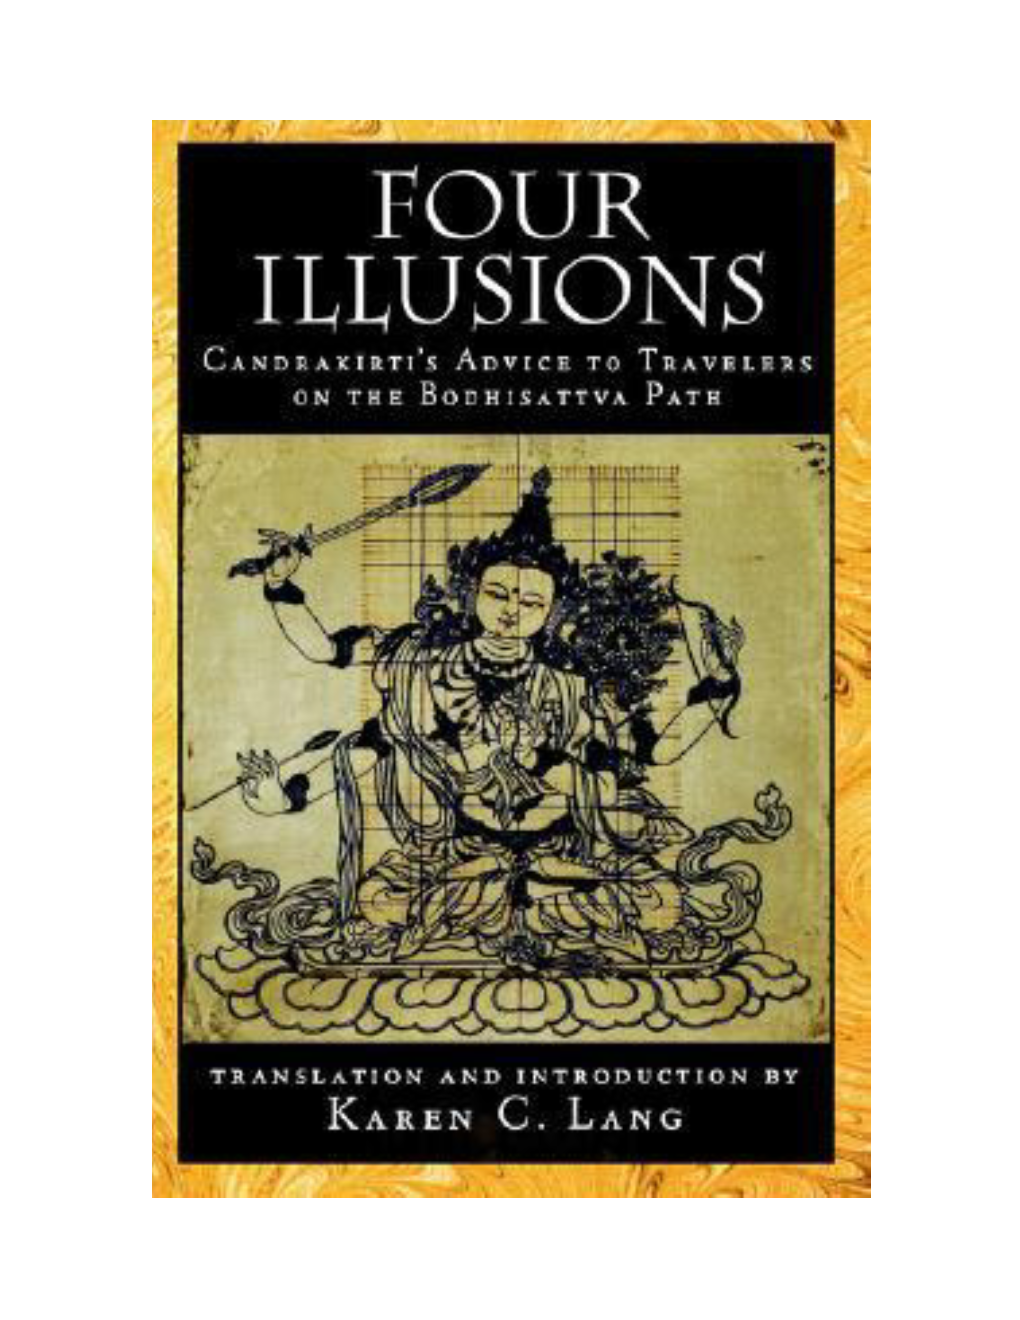 Four Illusions: Candrakirti's Advice to Travelers on the Bodhisattva Path